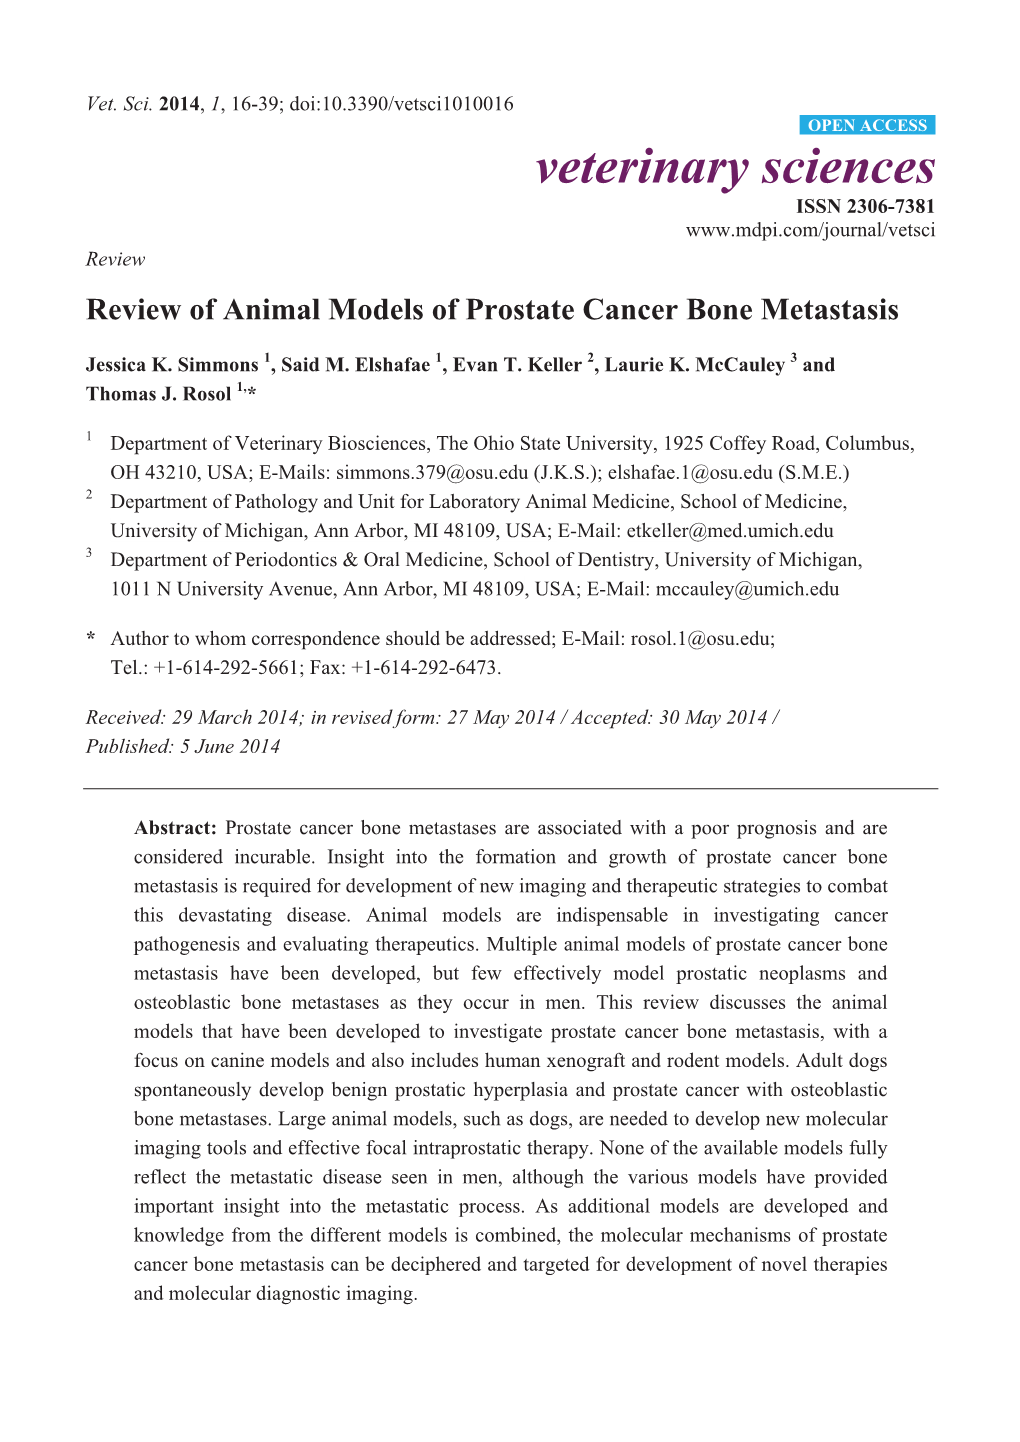 Review of Animal Models of Prostate Cancer Bone Metastasis